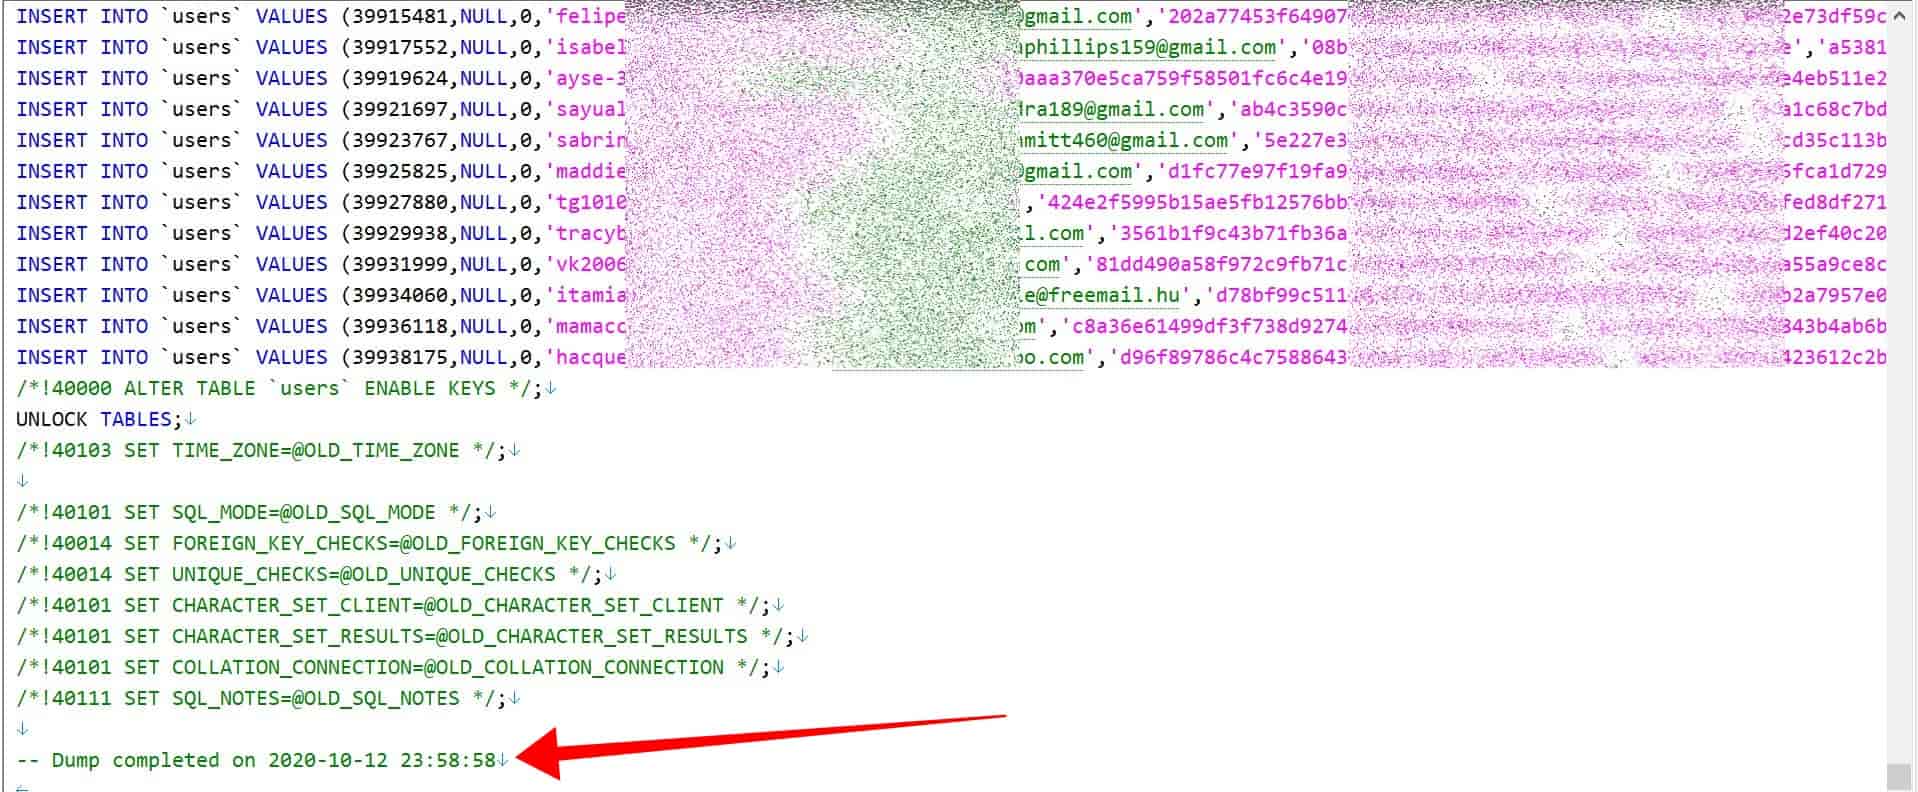 Animal Jam data breach - Hacker leaks database with millions of accounts